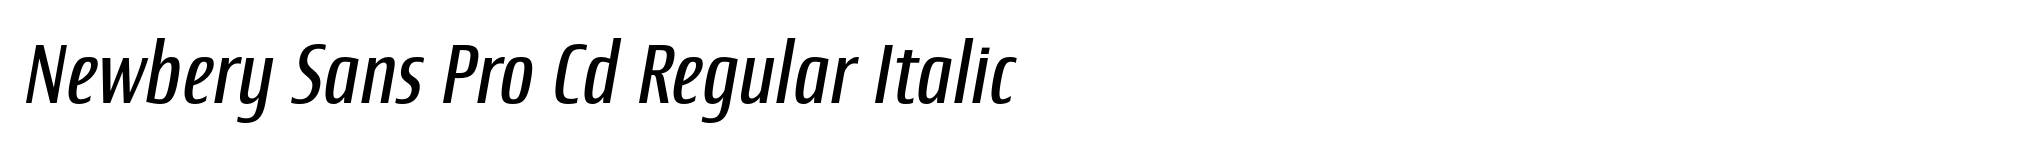 Newbery Sans Pro Cd Regular Italic image